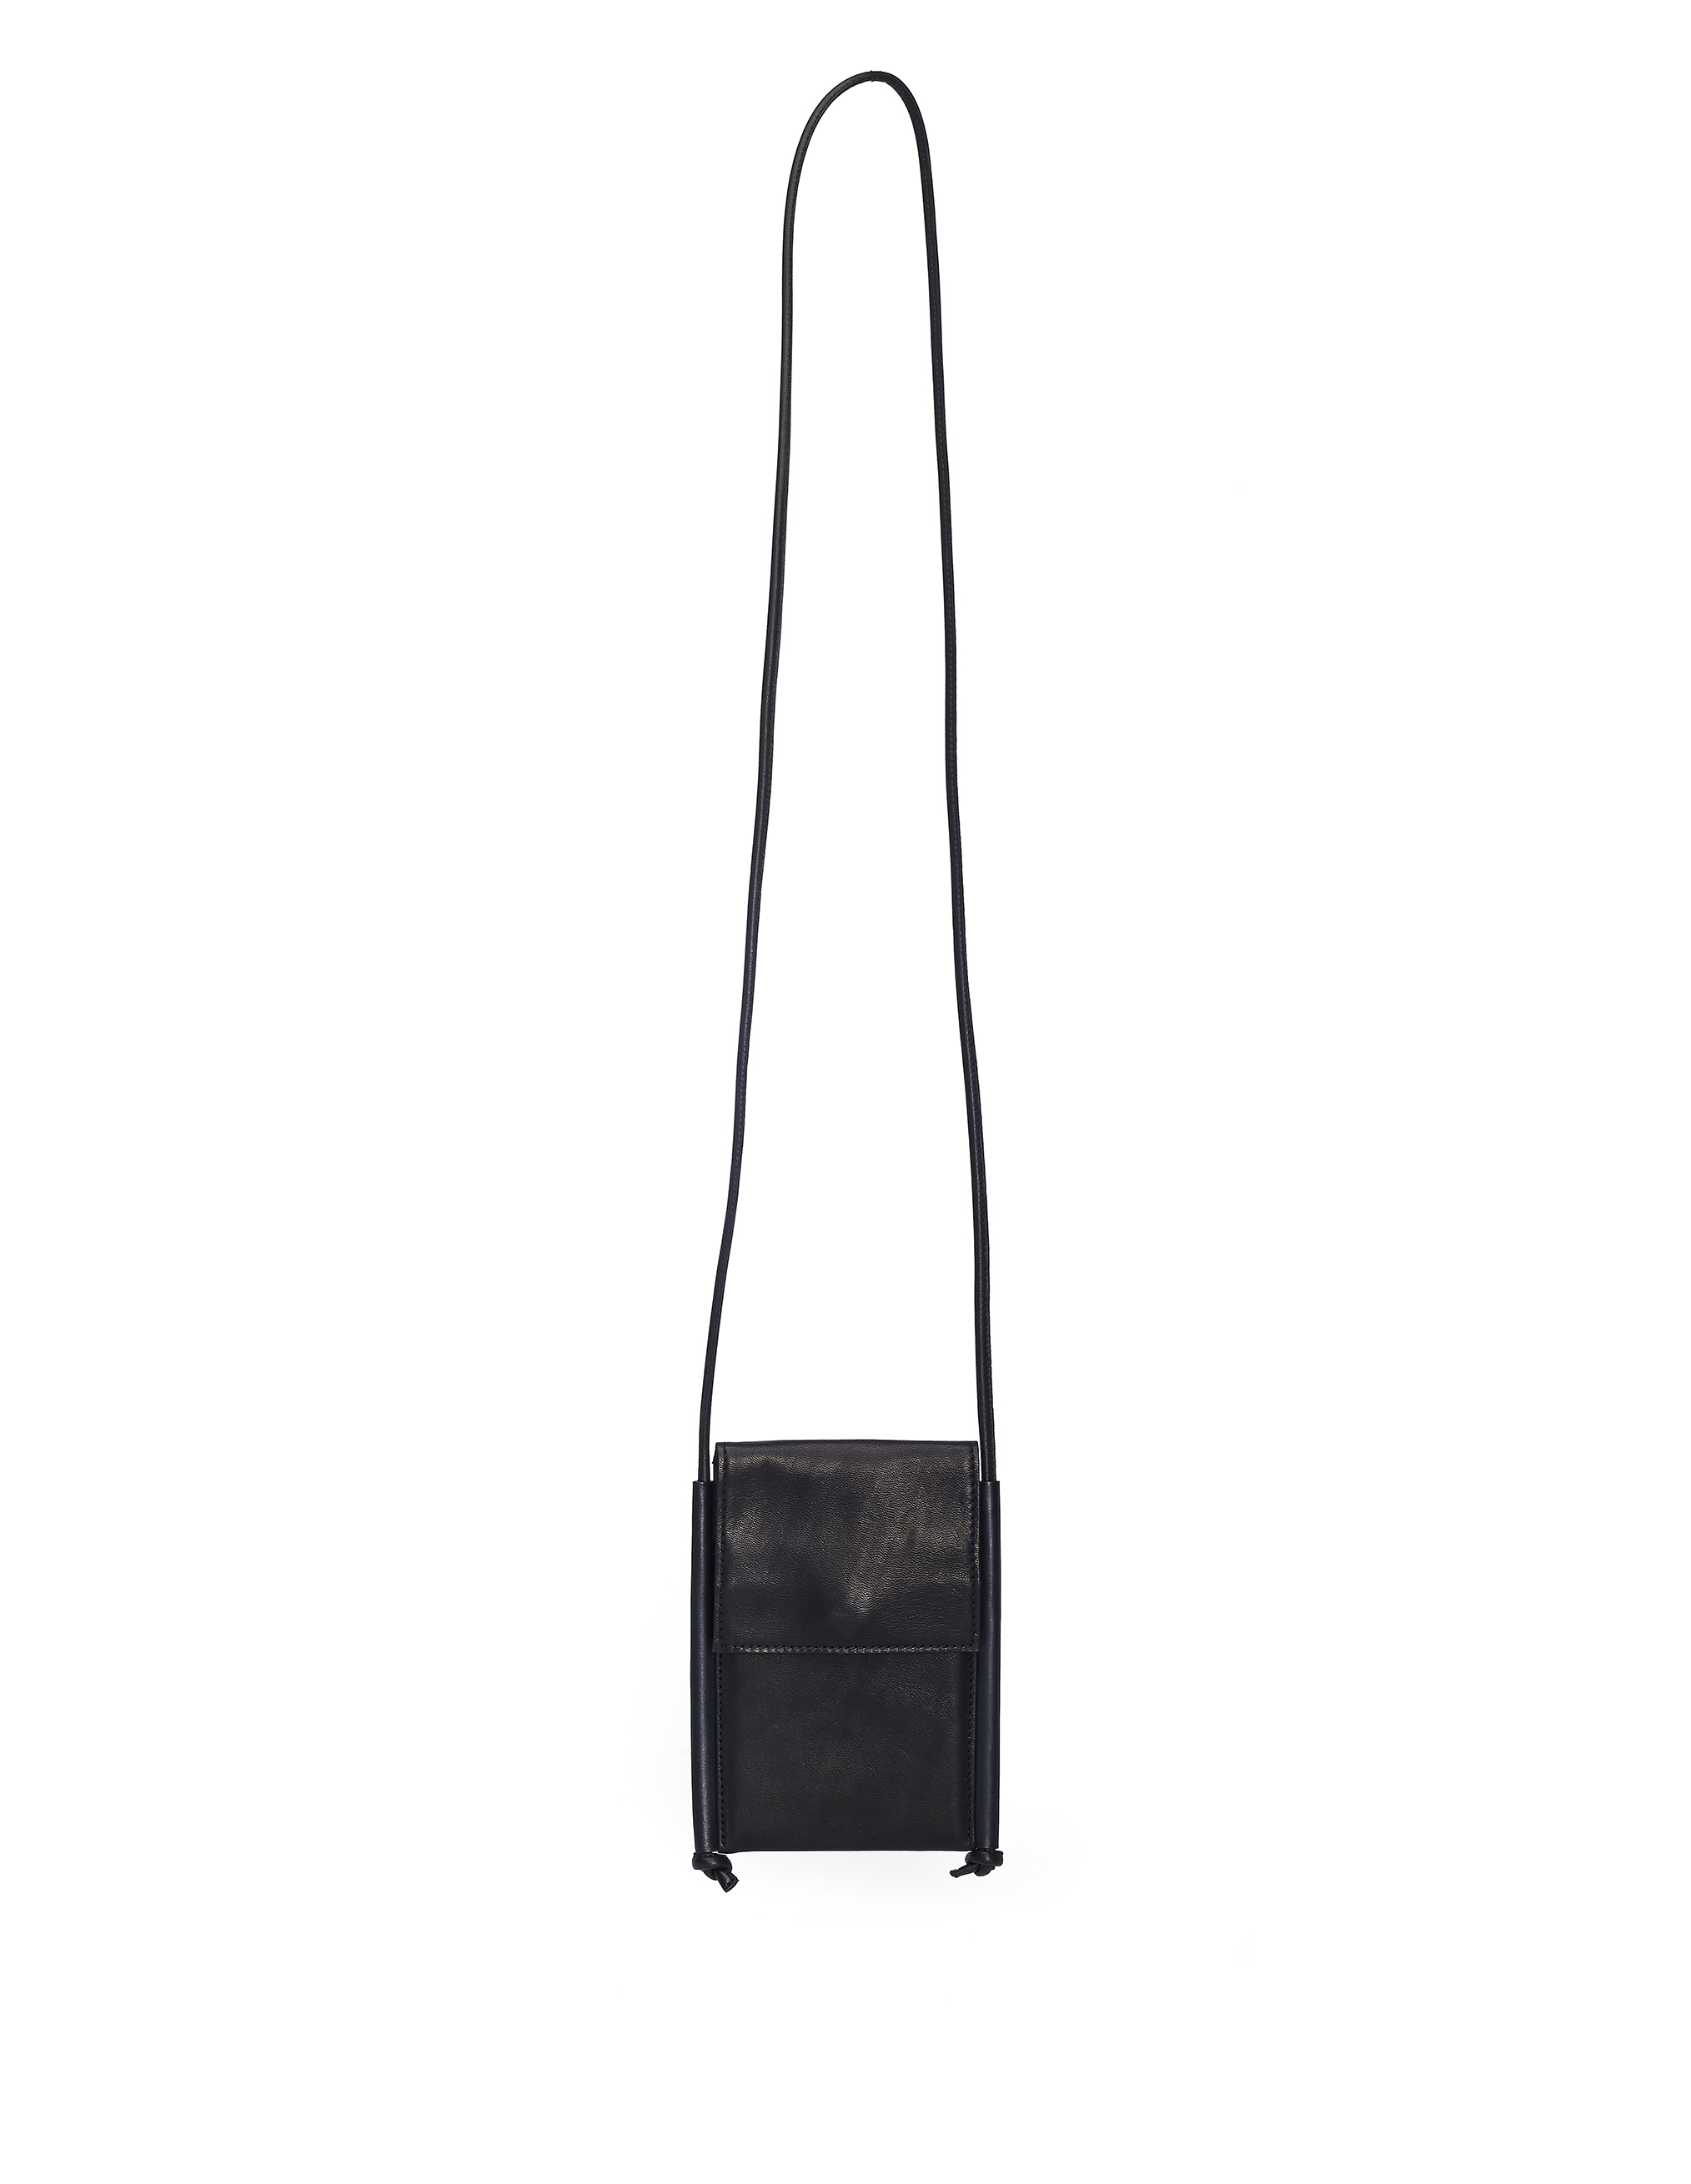 Yohji Yamamoto Black Leather Phone Case